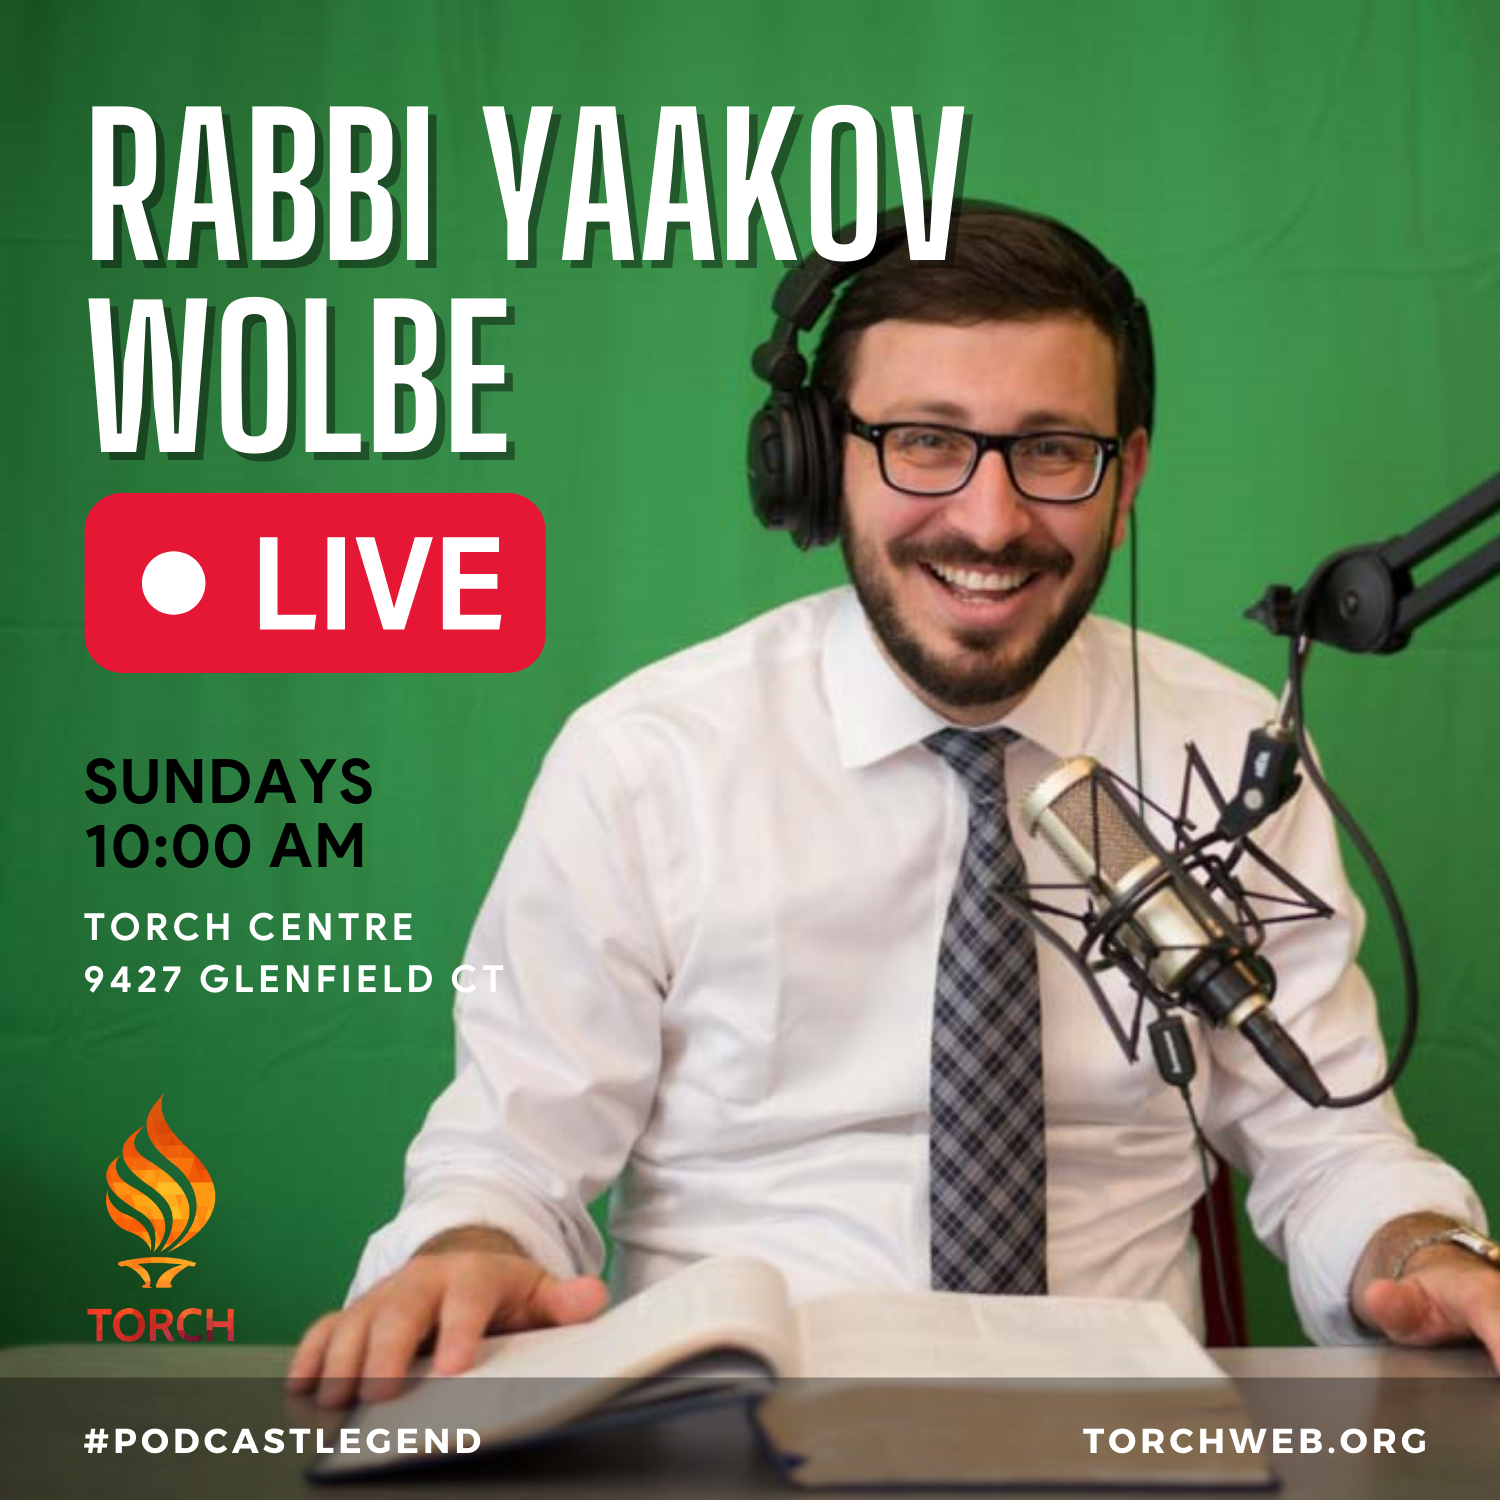 Rabbi Yaakov Wolbe Live